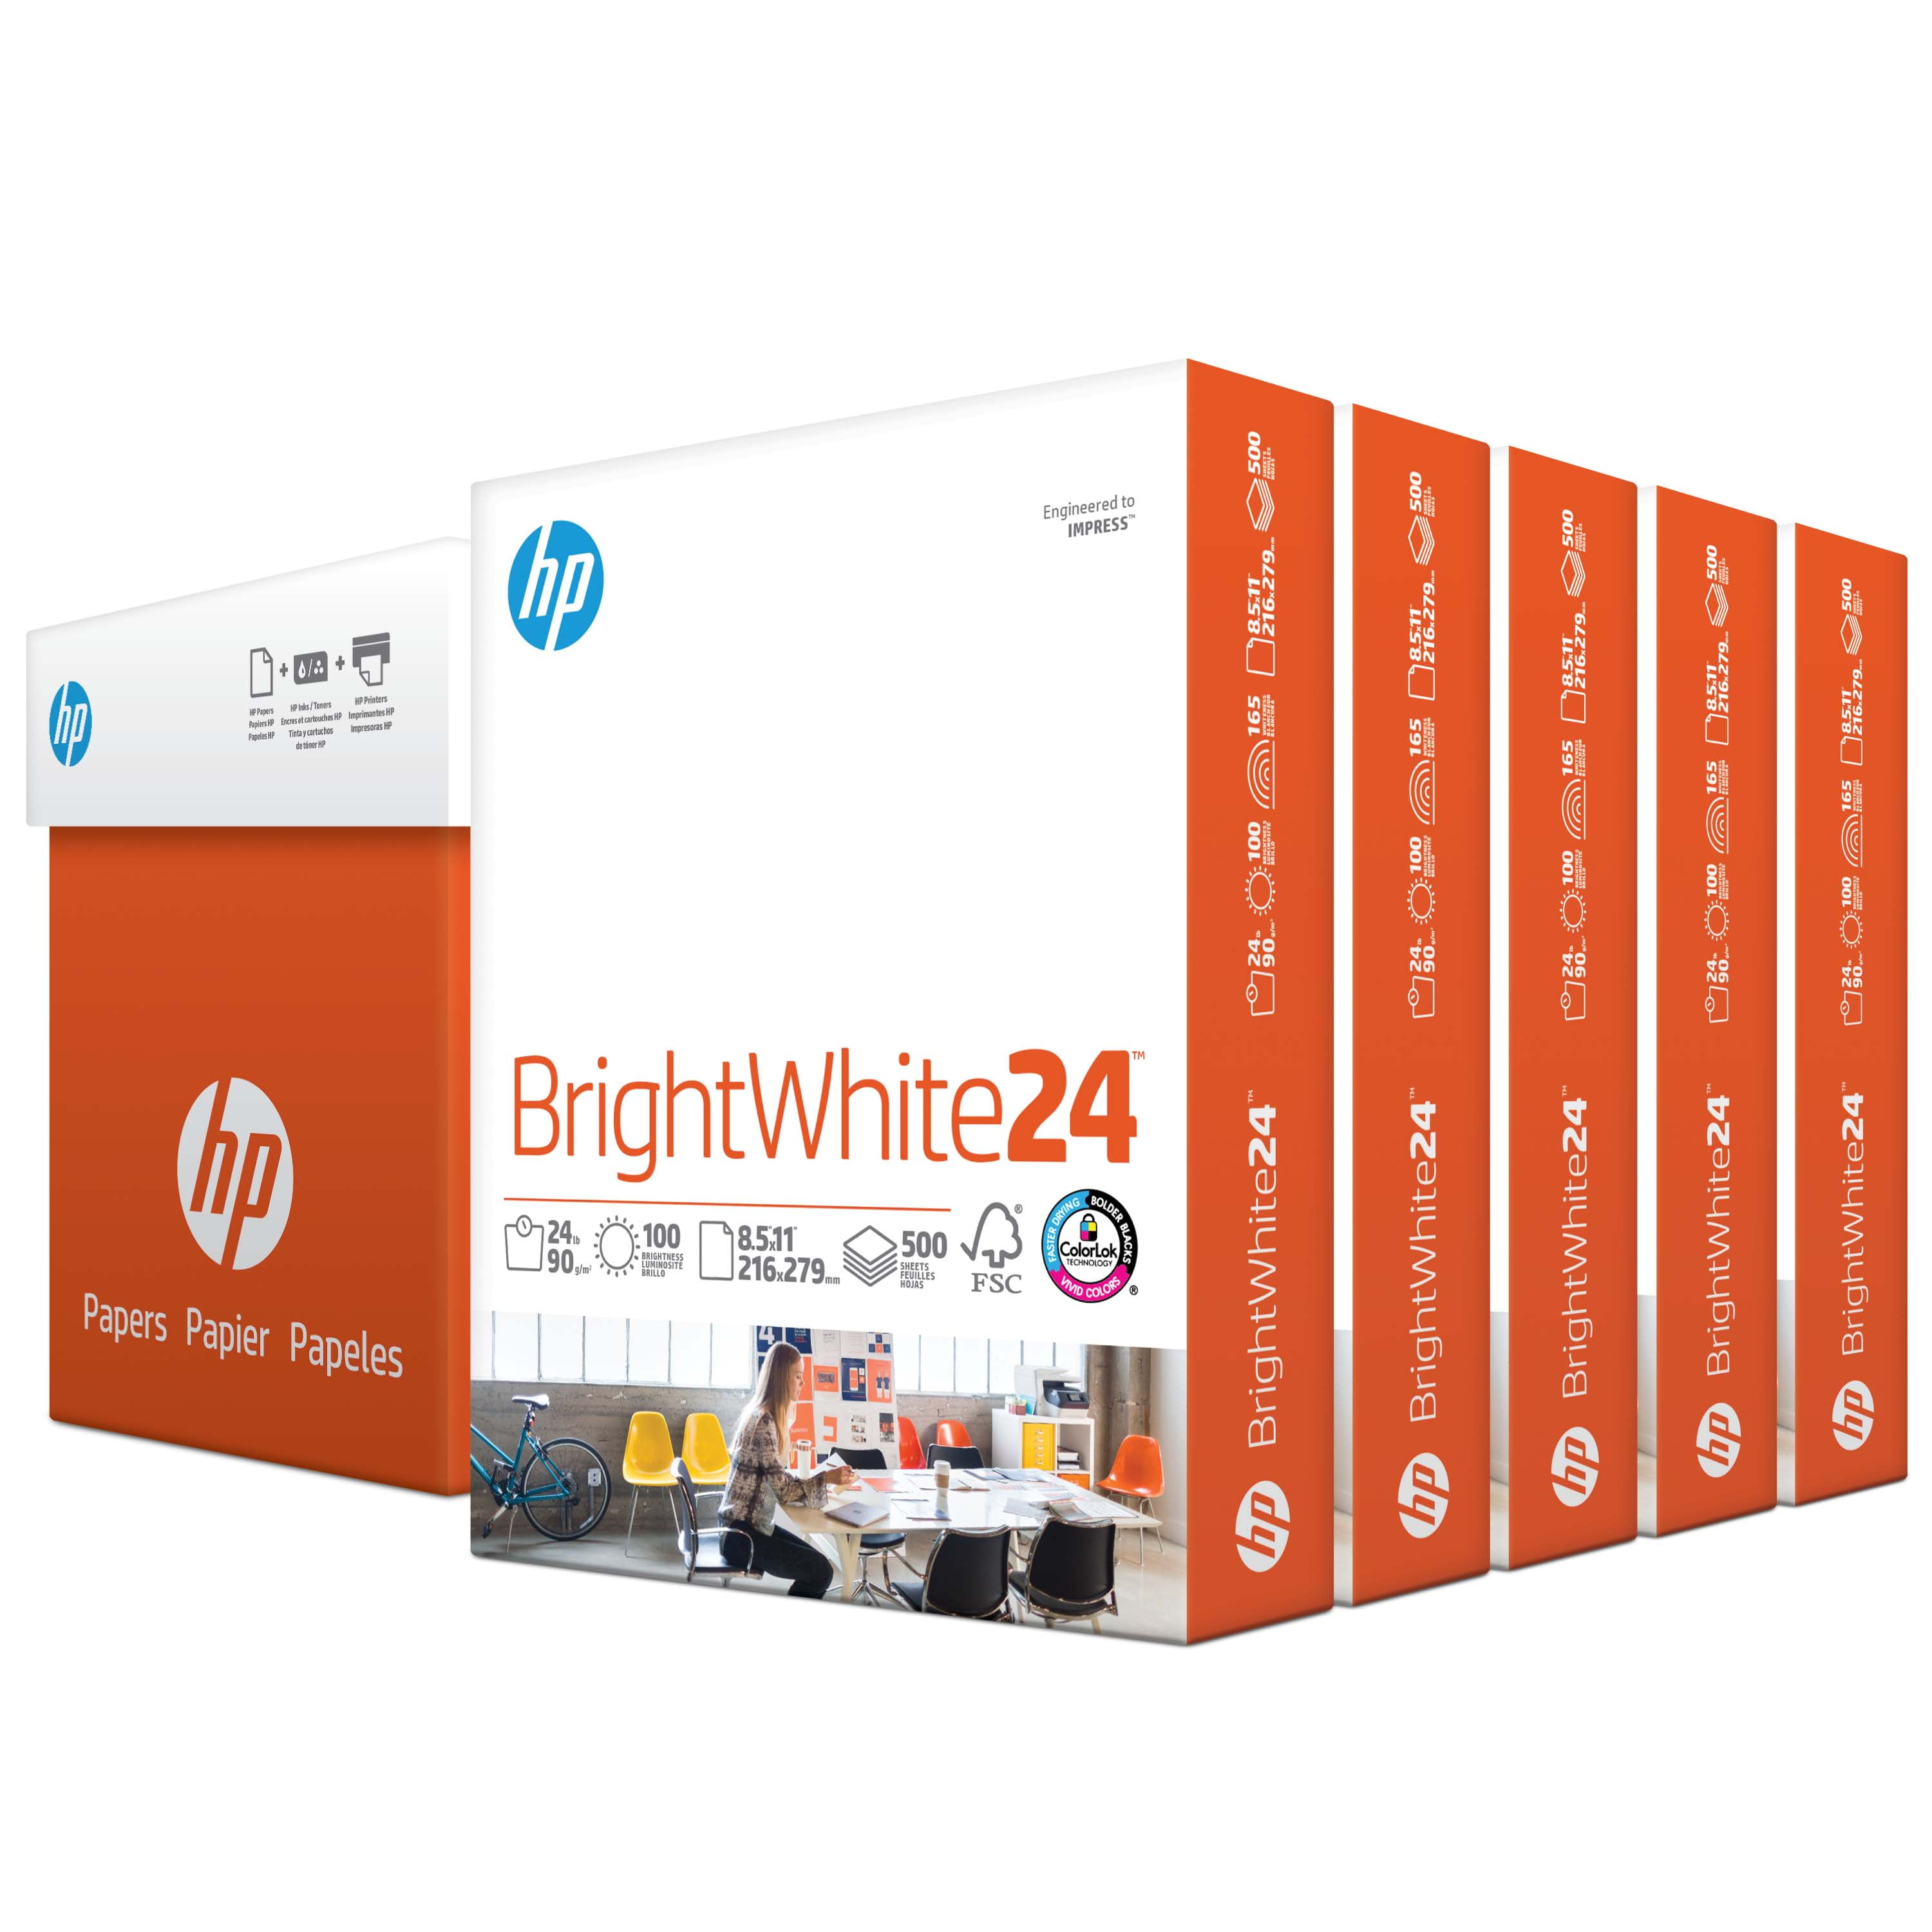 Brightwhite 24lb 5 Ream 2,500 Sheets HP Printer Paper 8.5x11 